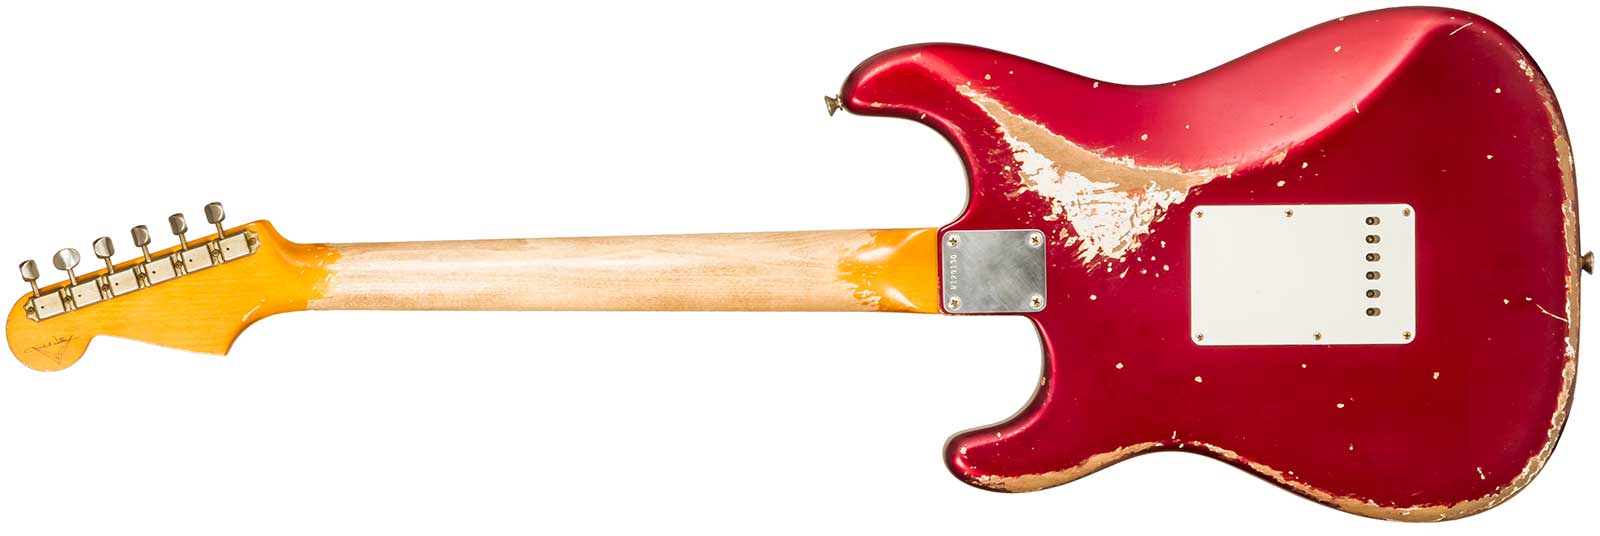 Fender Custom Shop Strat 1964 Masterbuilt P.waller 3s Trem Rw #r129130 - Heavy Relic Candy Apple Red - Guitare Électrique Forme Str - Variation 1